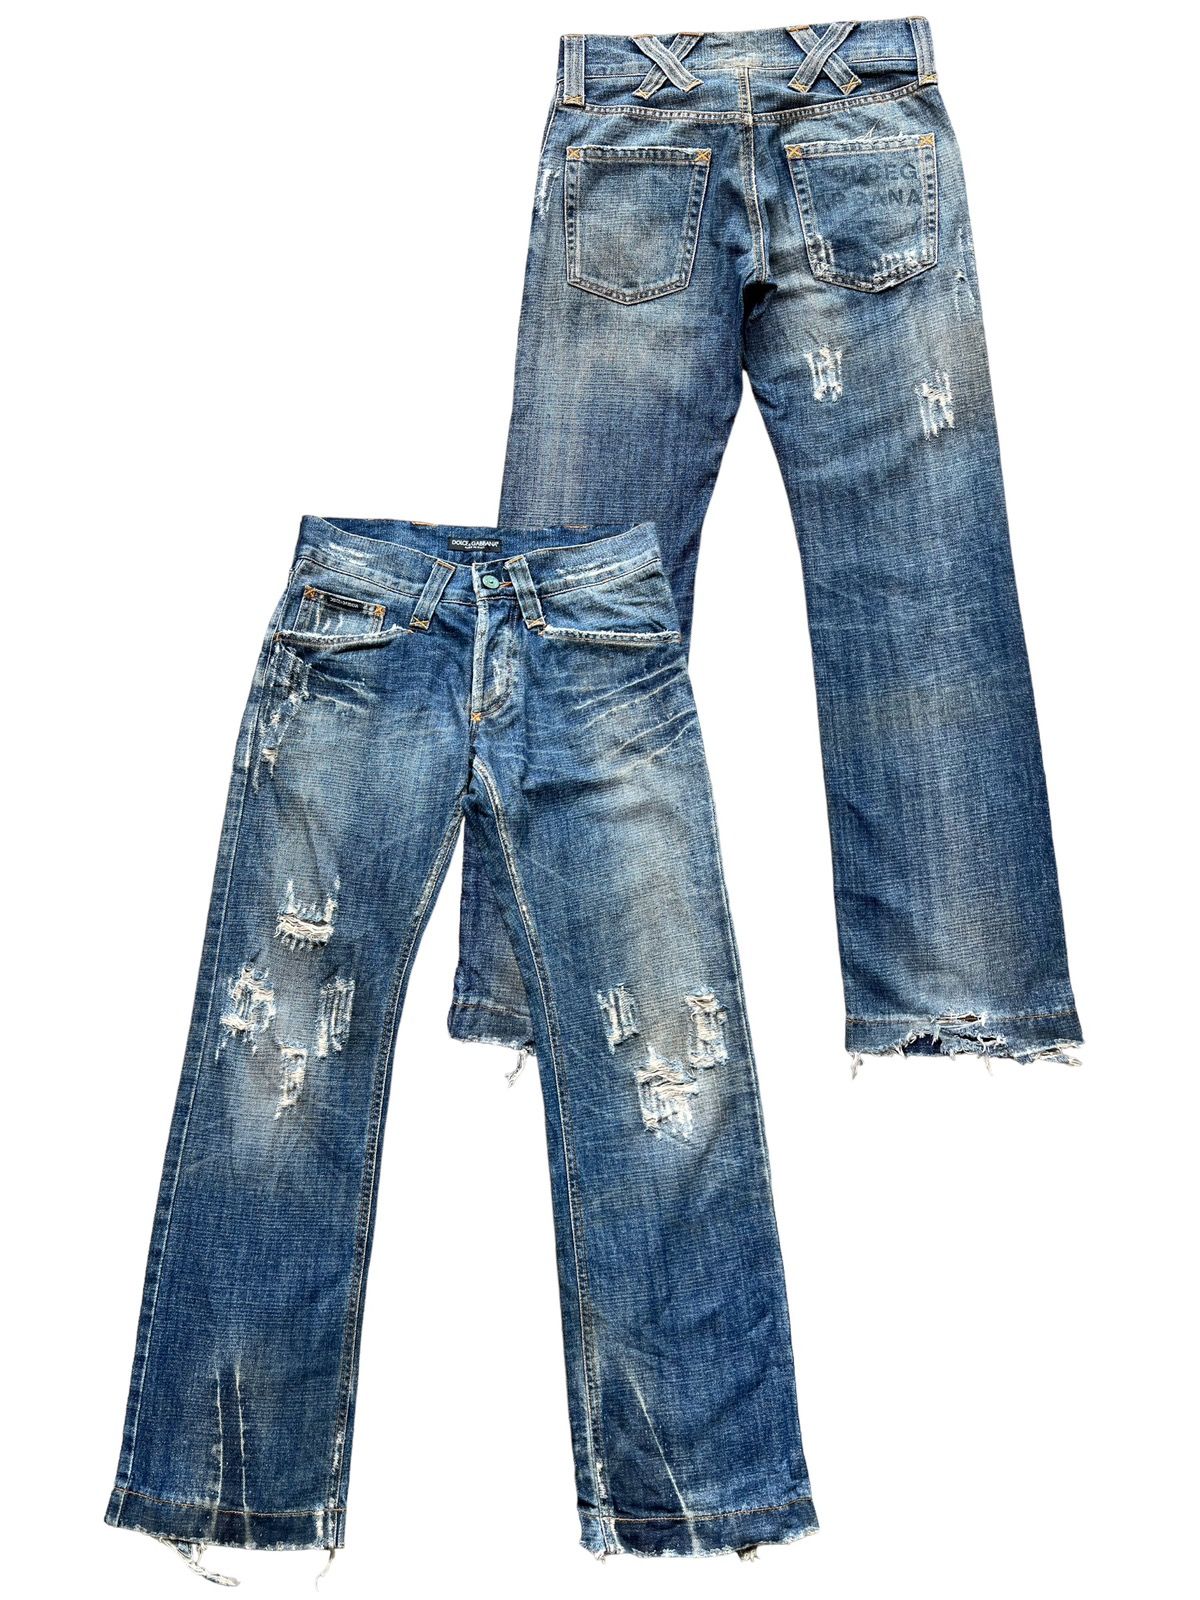 Dolce and Gabbana Crash Distressed Denim Jeans 31x32.5 - 1